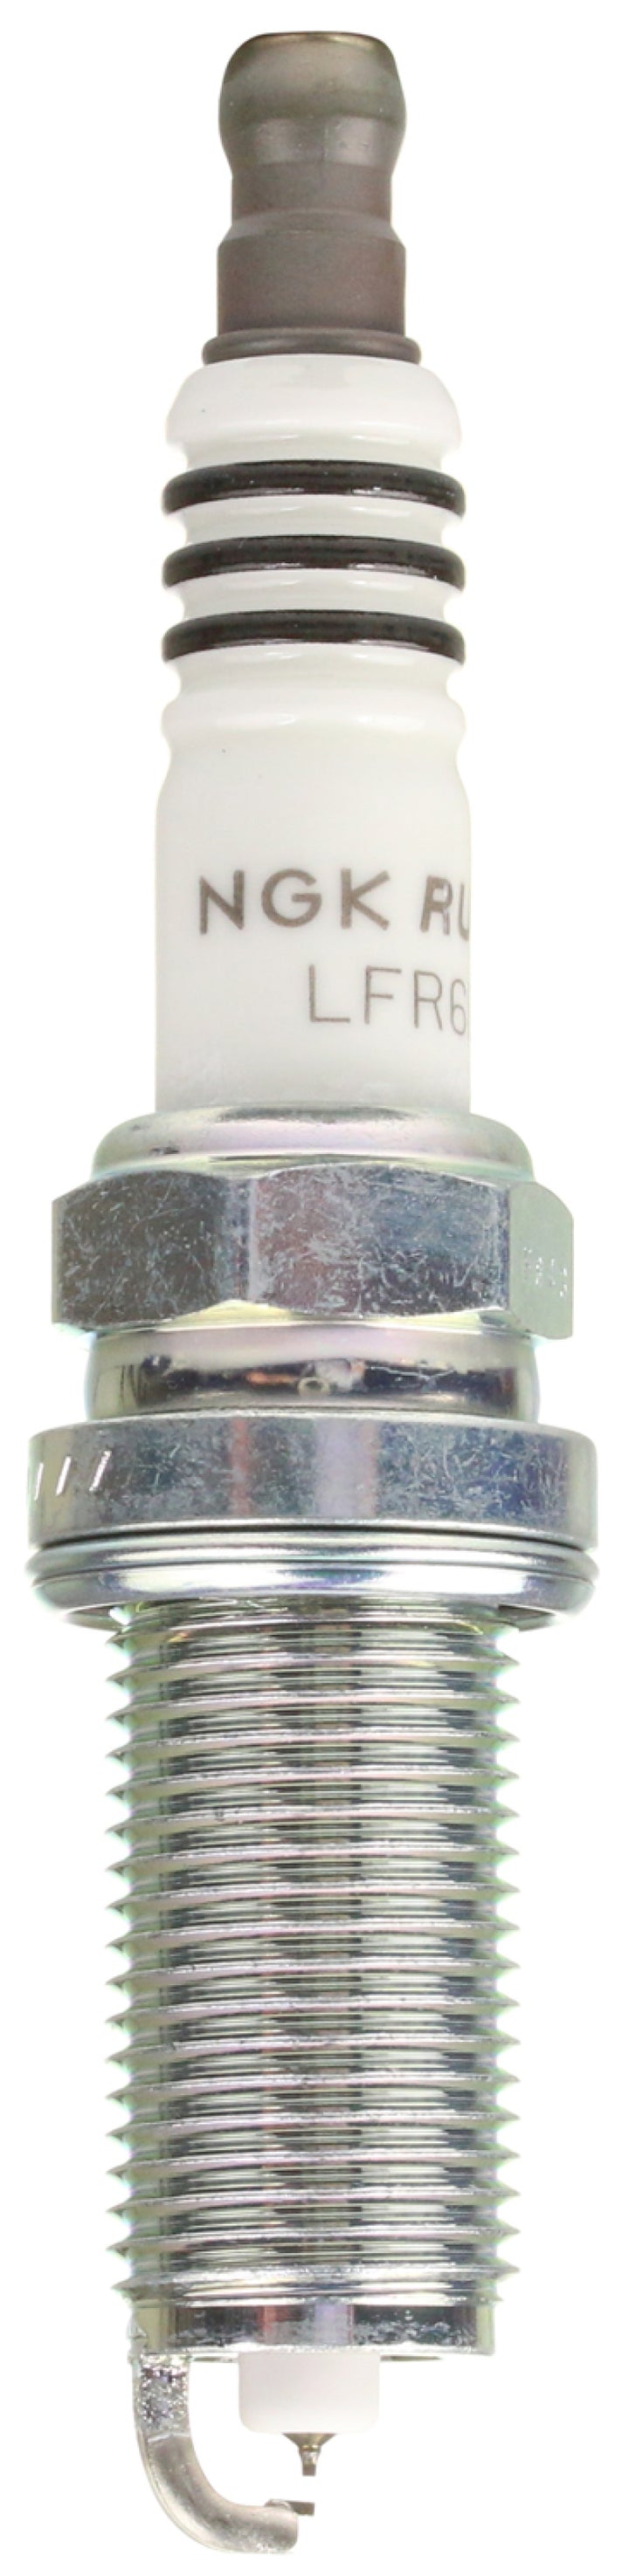 NGK Ruthenium HX Spark Plug - Box of 4 (LFR6BHX).